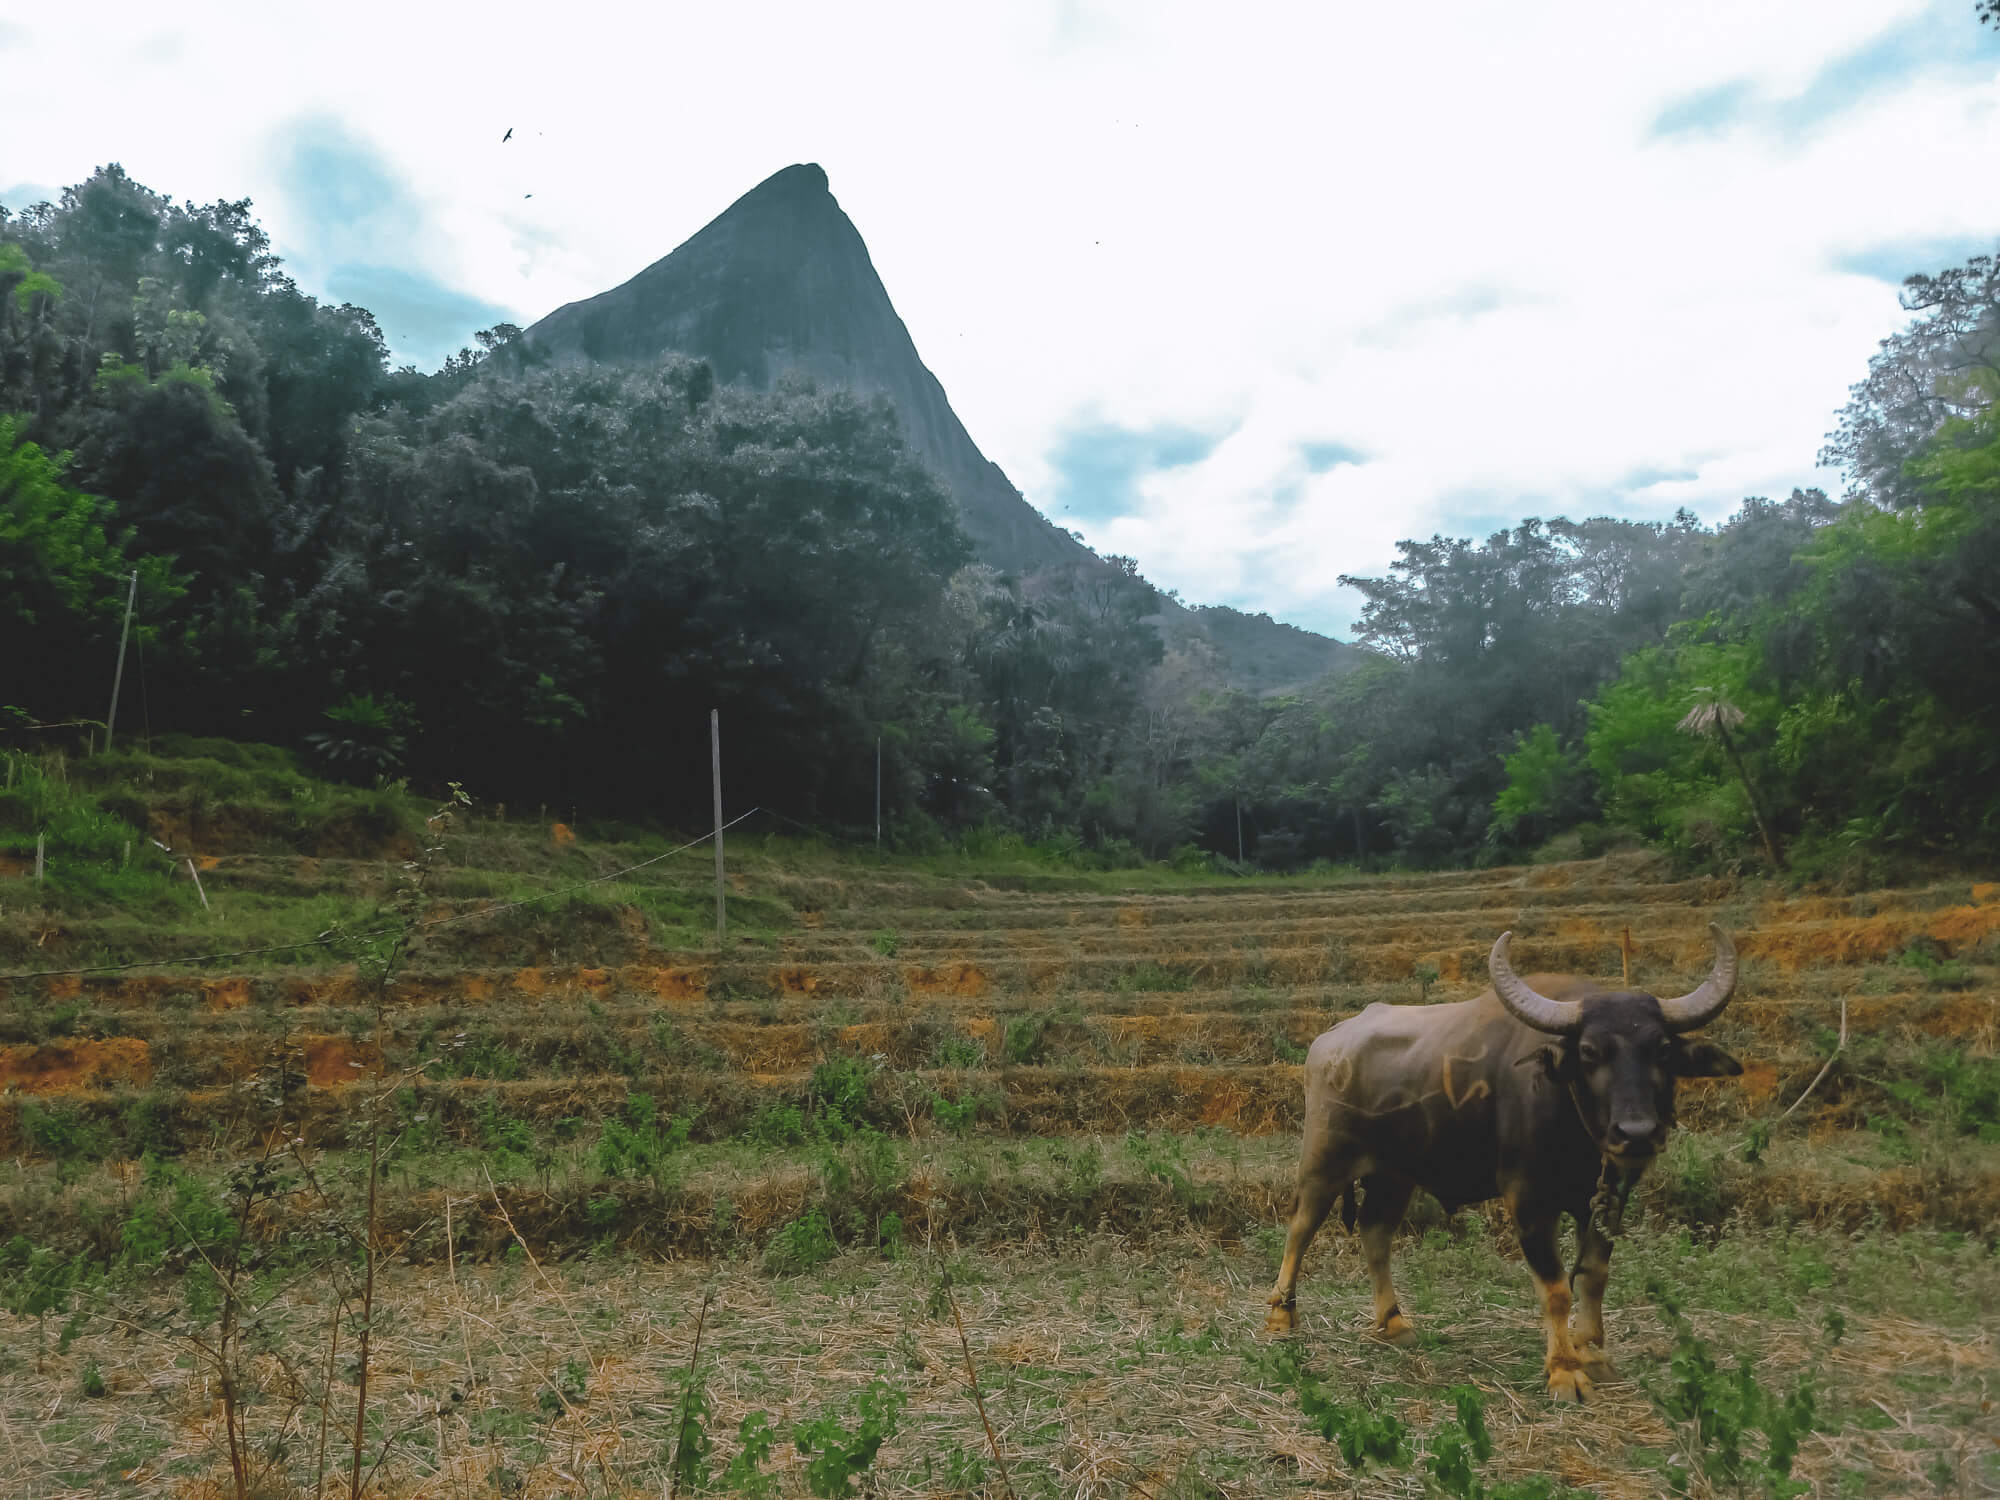 An angry buffalo stares menacingly at a holidayer in Sri Lanka visiting Meemure on their itinerary